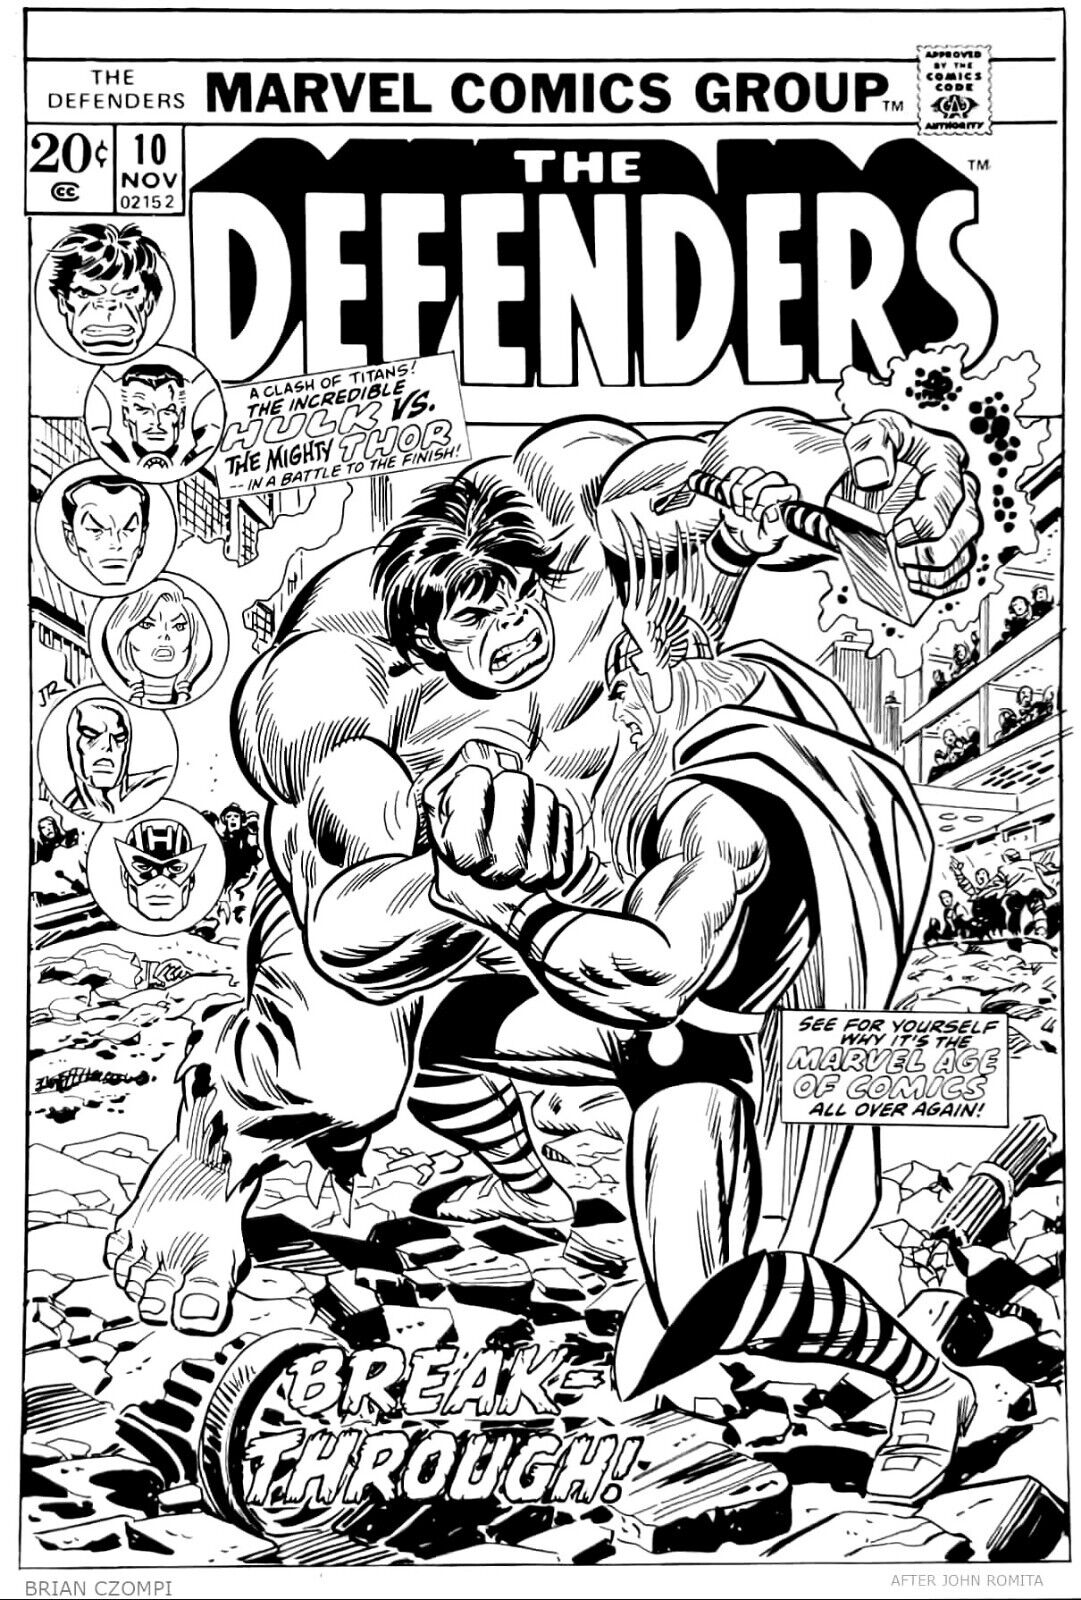 The Defenders #10 John Romita Cover Re-creation